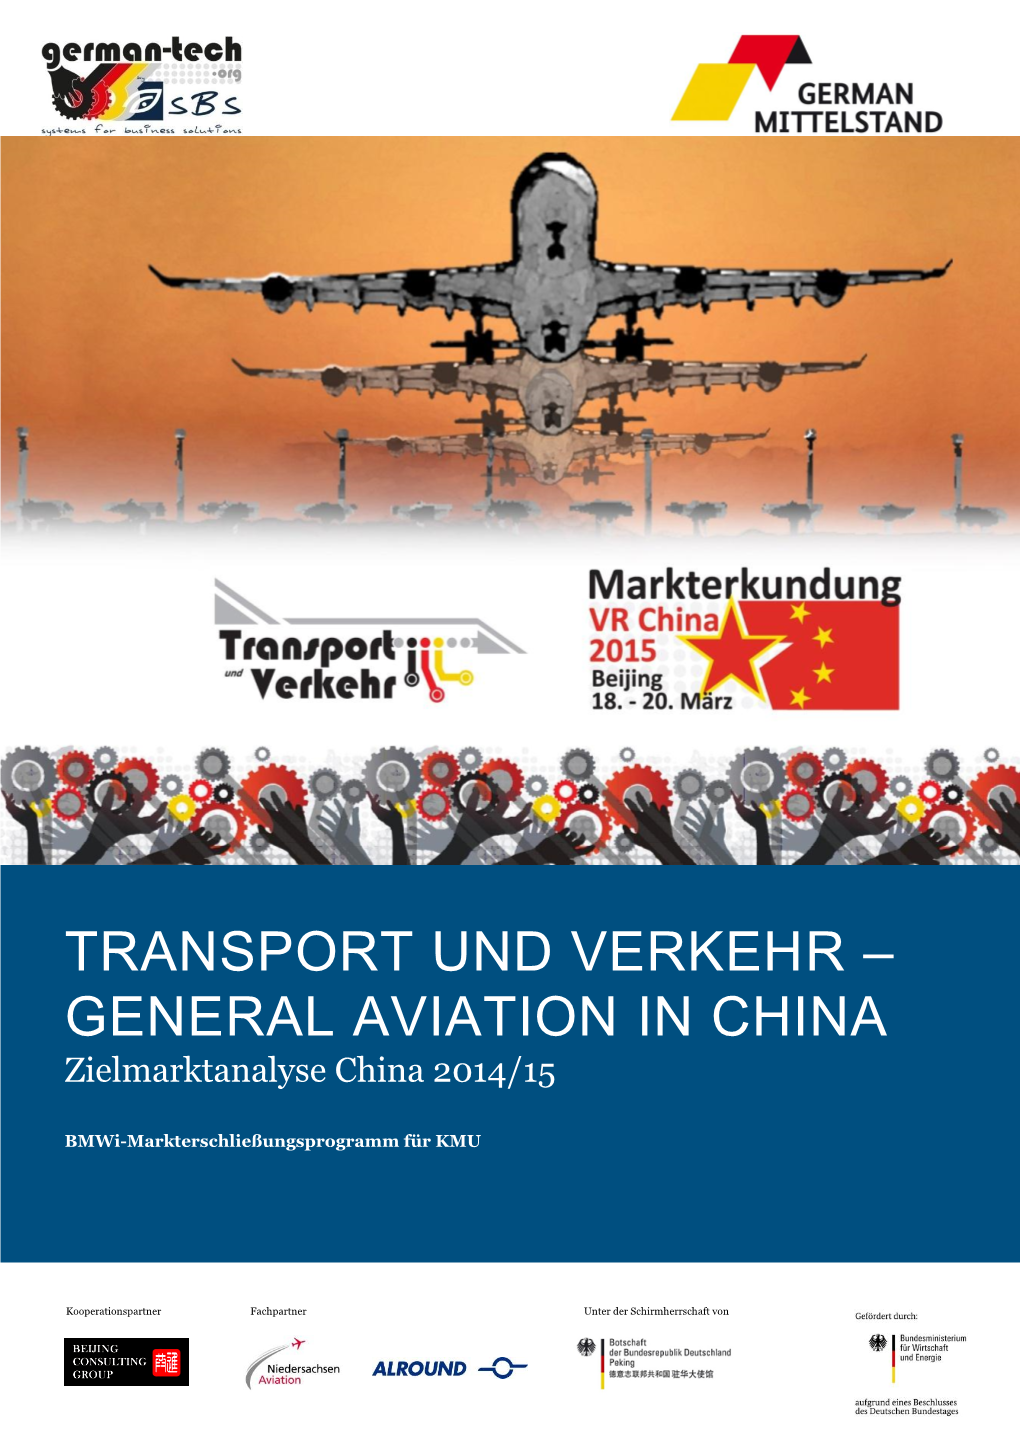 GENERAL AVIATION in CHINA Zielmarktanalyse China 2014/15